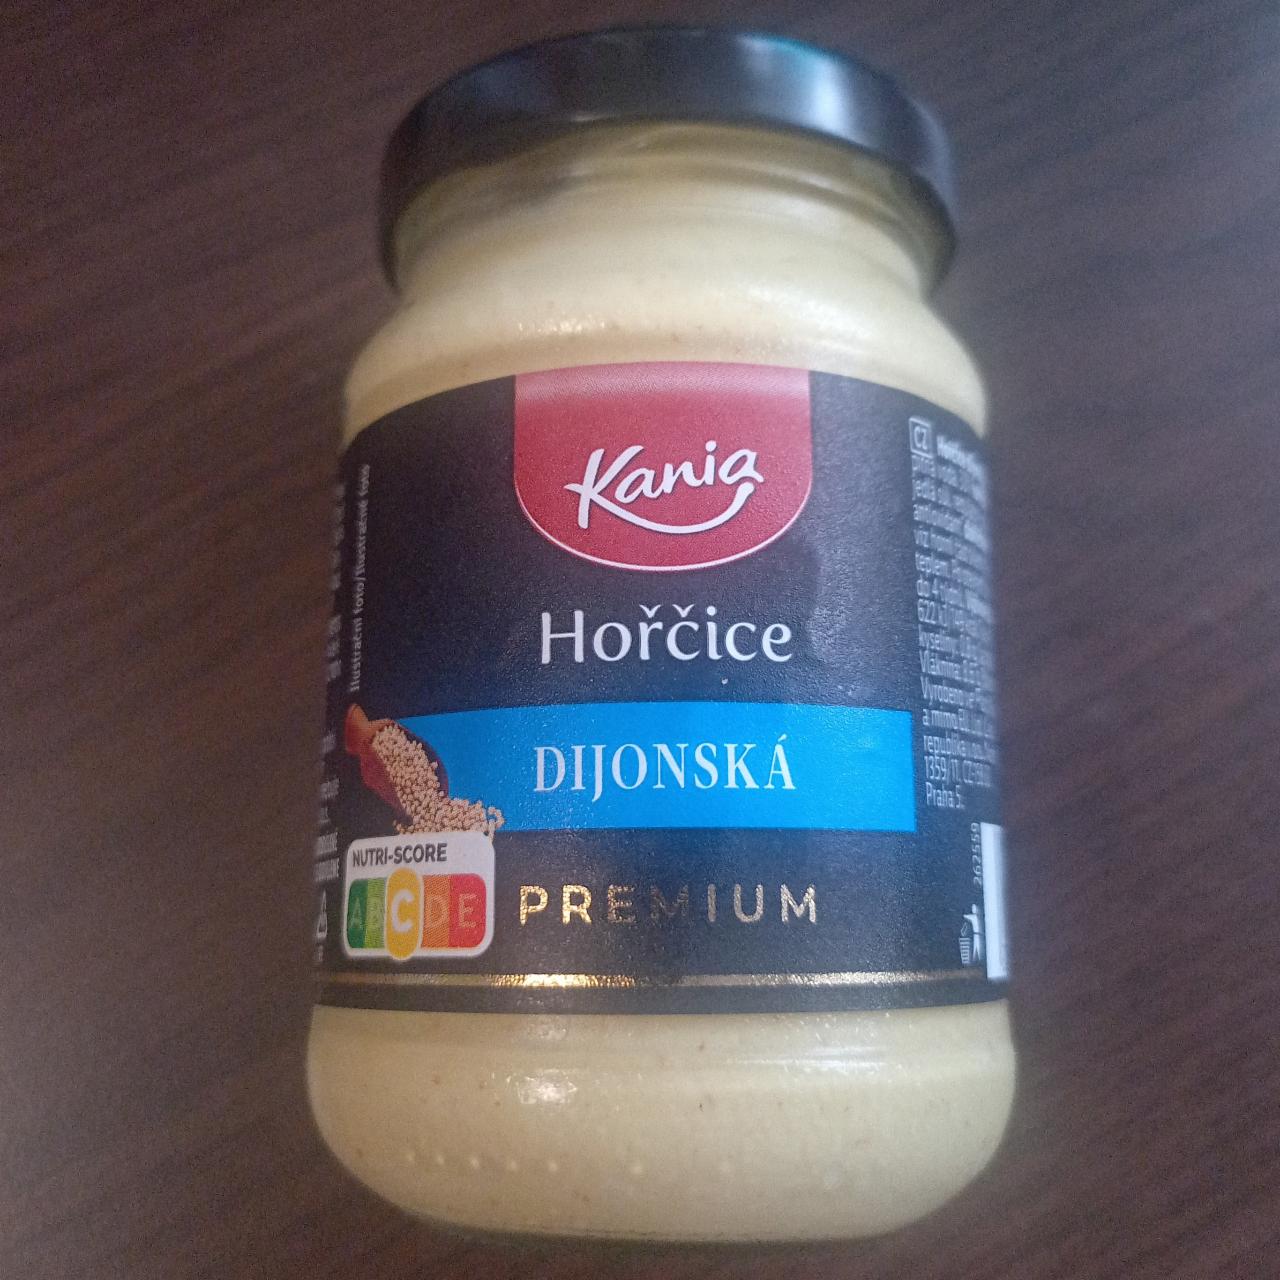 Fotografie - Hořčice Dijonská Premium Kania